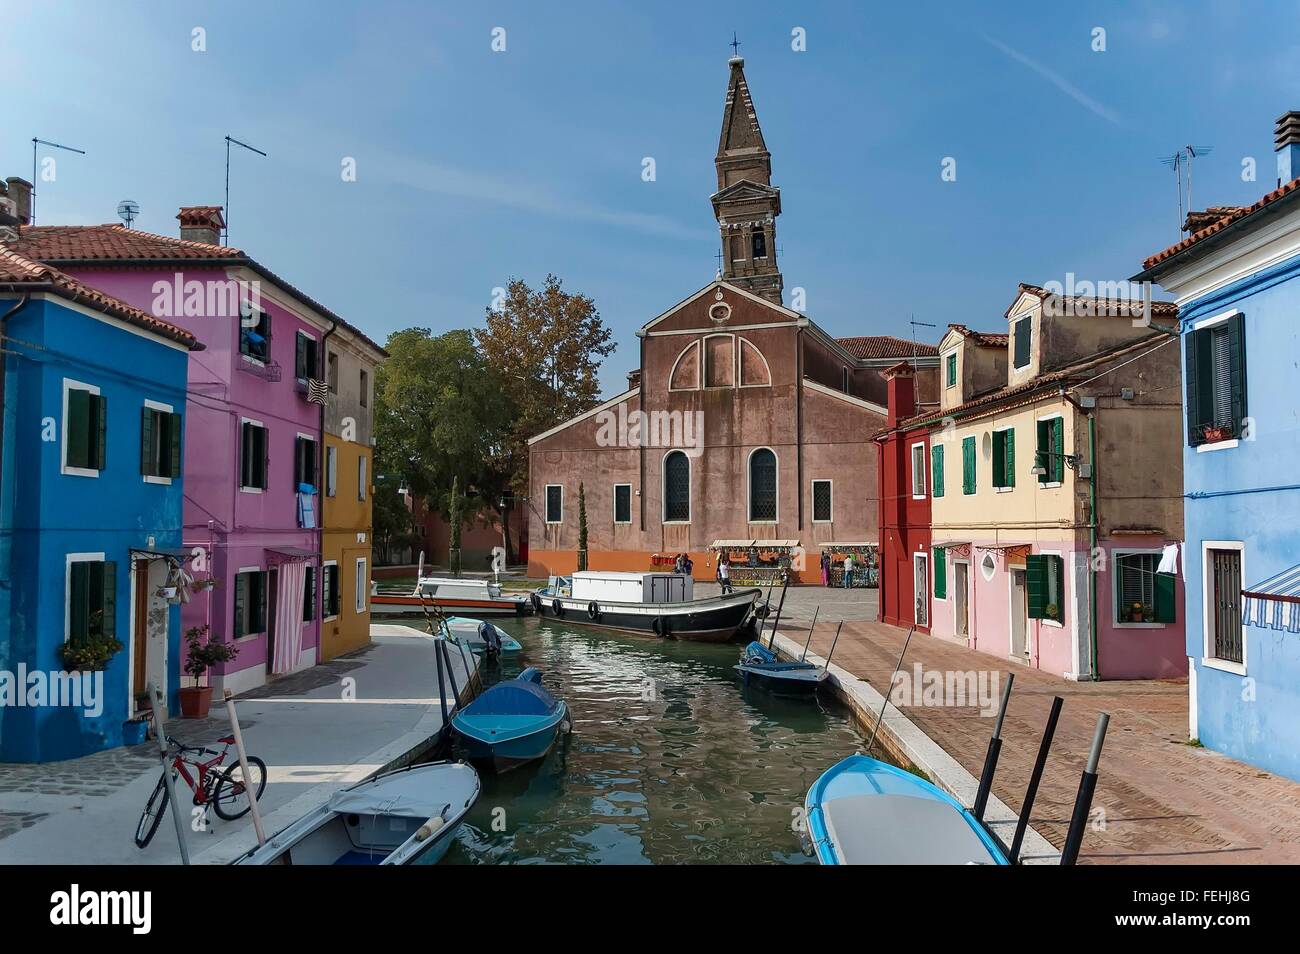 Venice landmark, Burano island canal, colorful houses, church and boats, Italy. Stock Photo